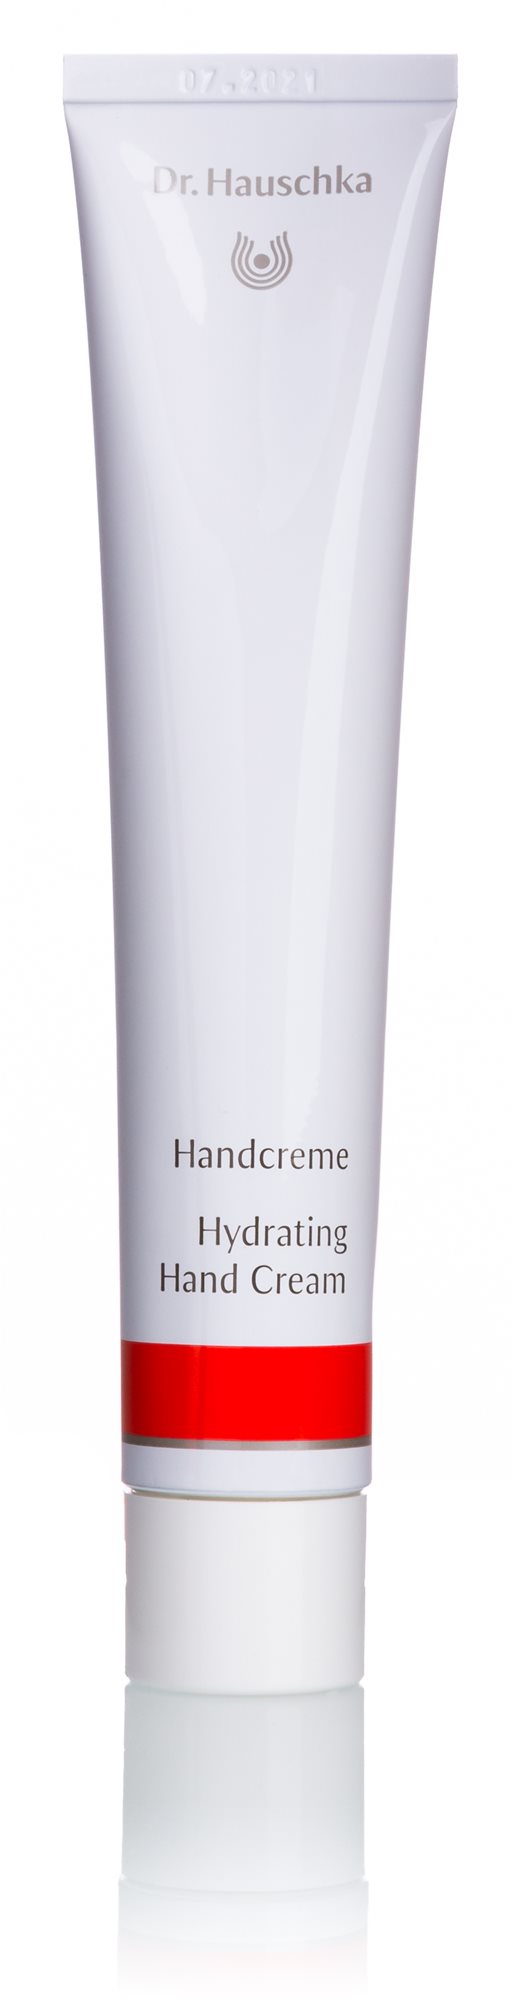 Kézkrém DR. HAUSCHKA Hydrating Hand Cream 50 ml